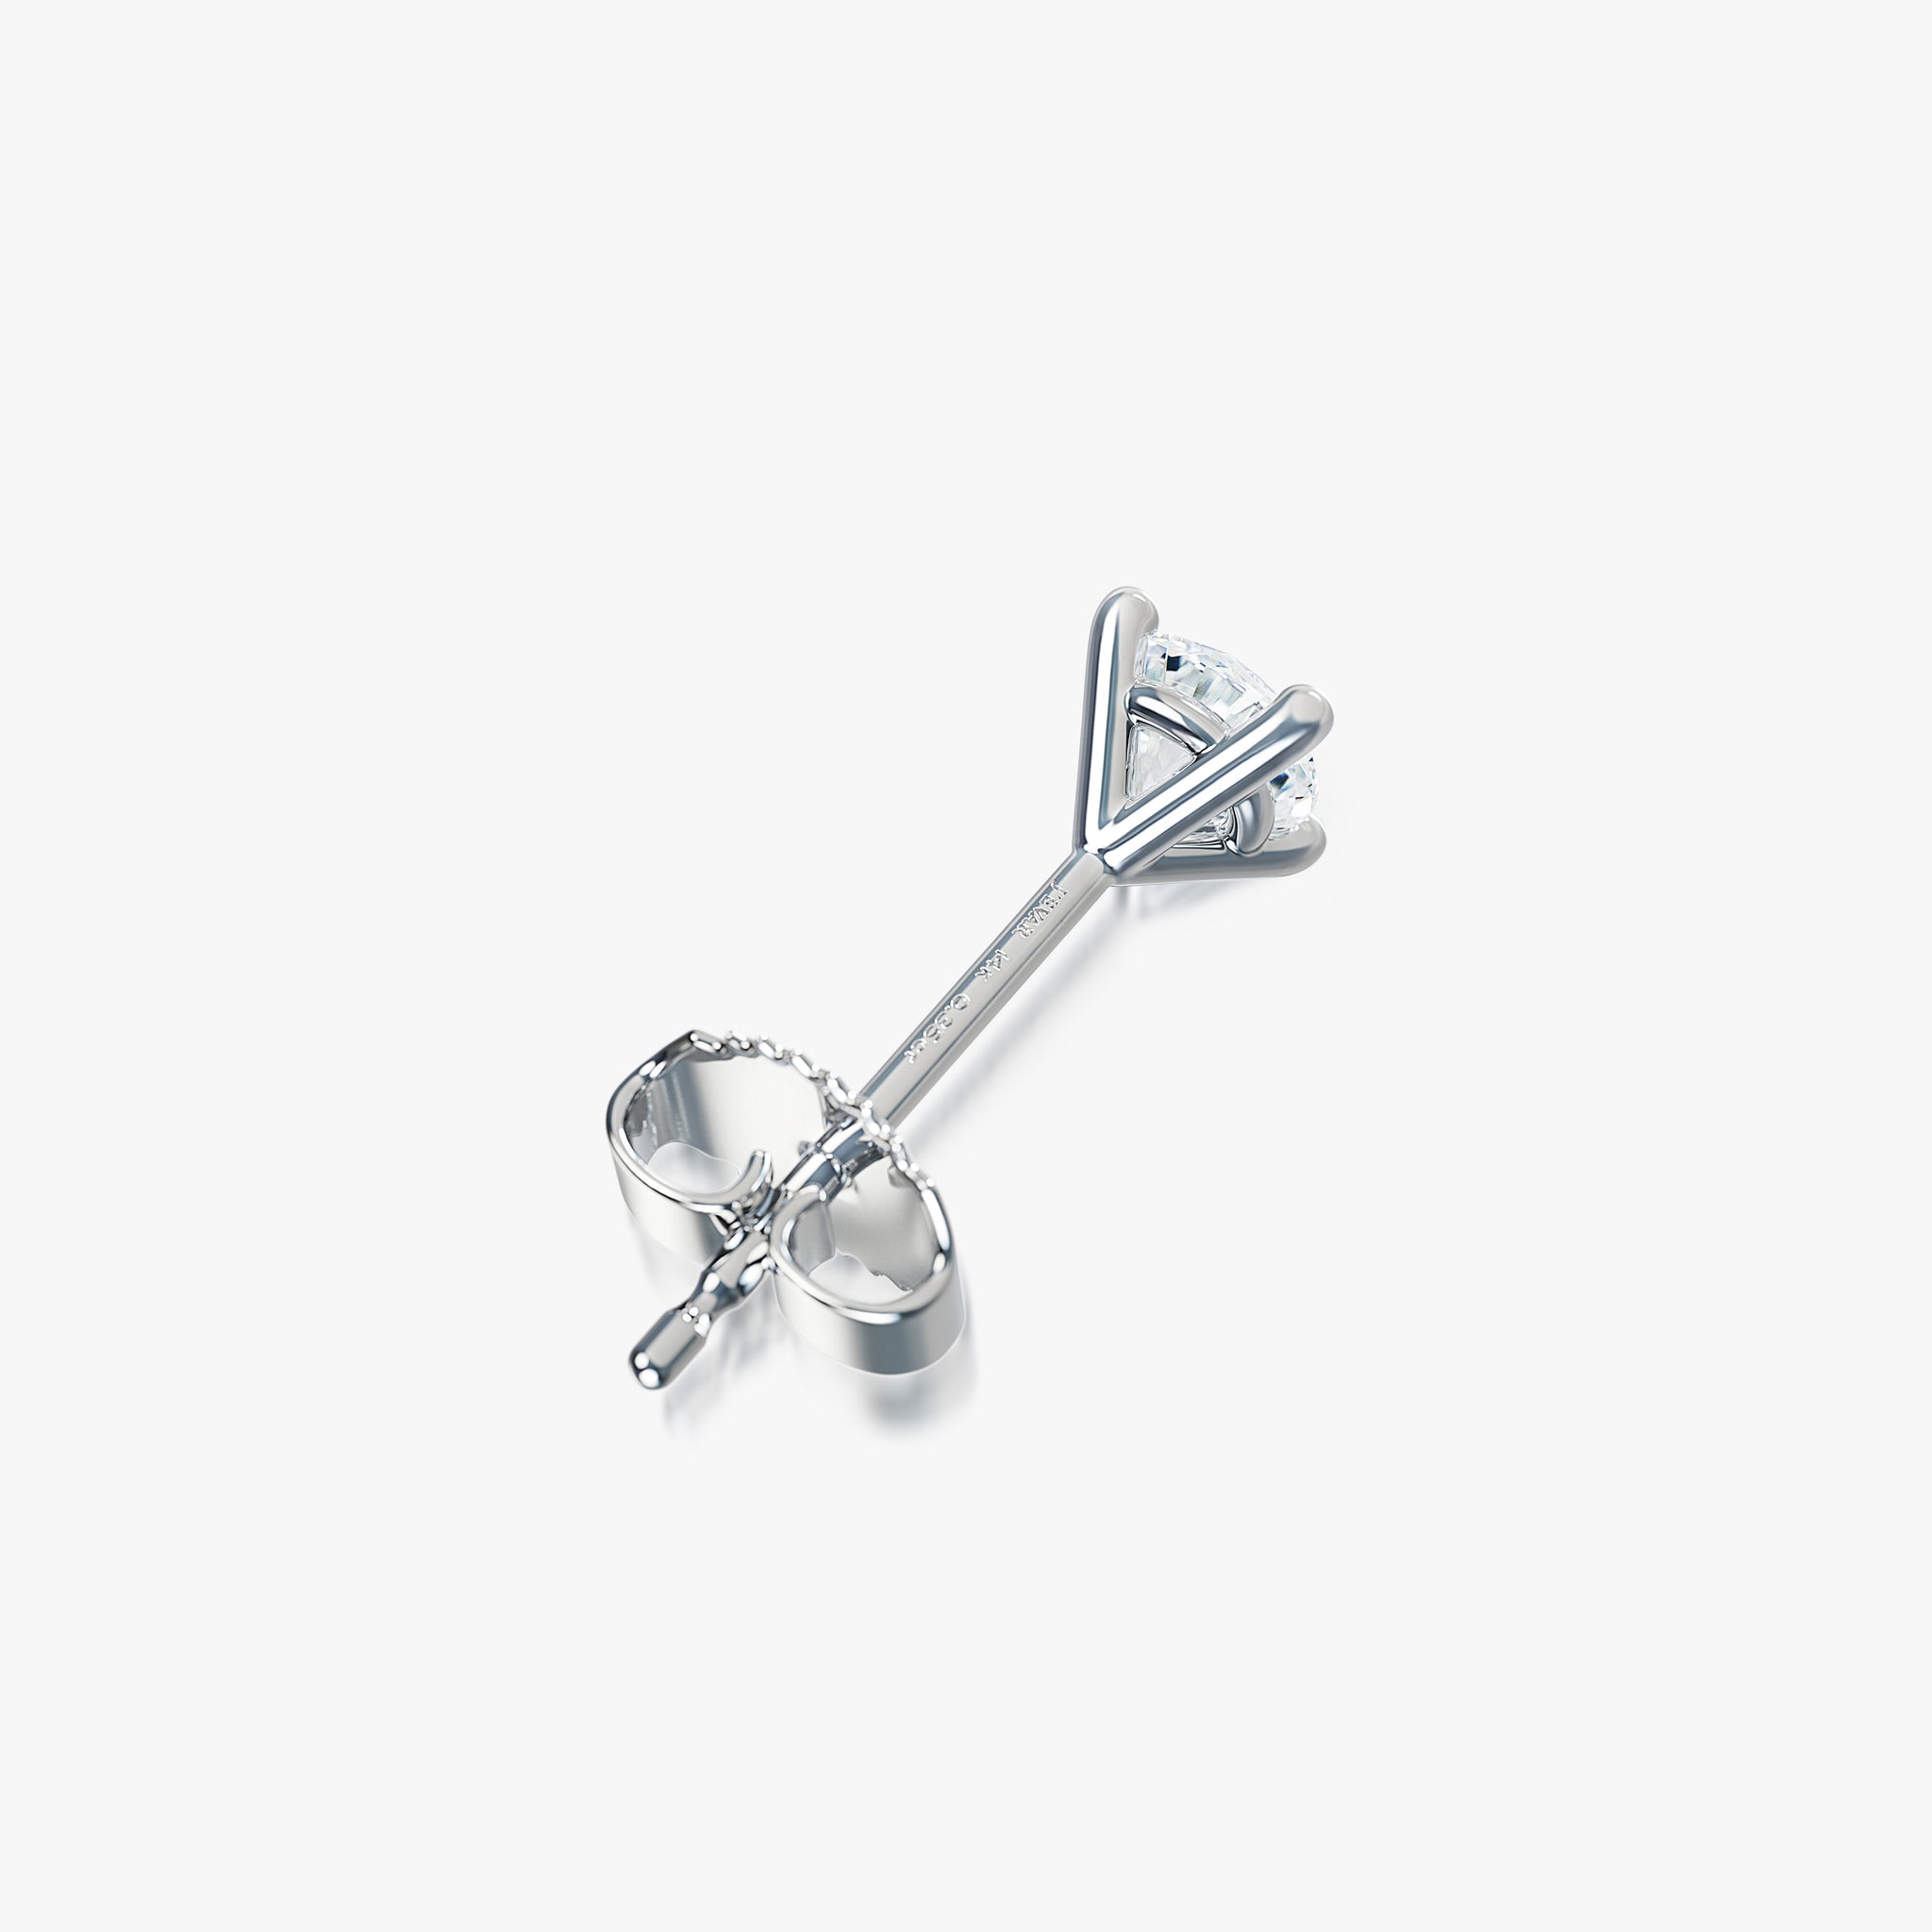 J'EVAR 14KT White Gold ALTR Lab Grown Diamond Stud Earrings Size Guide